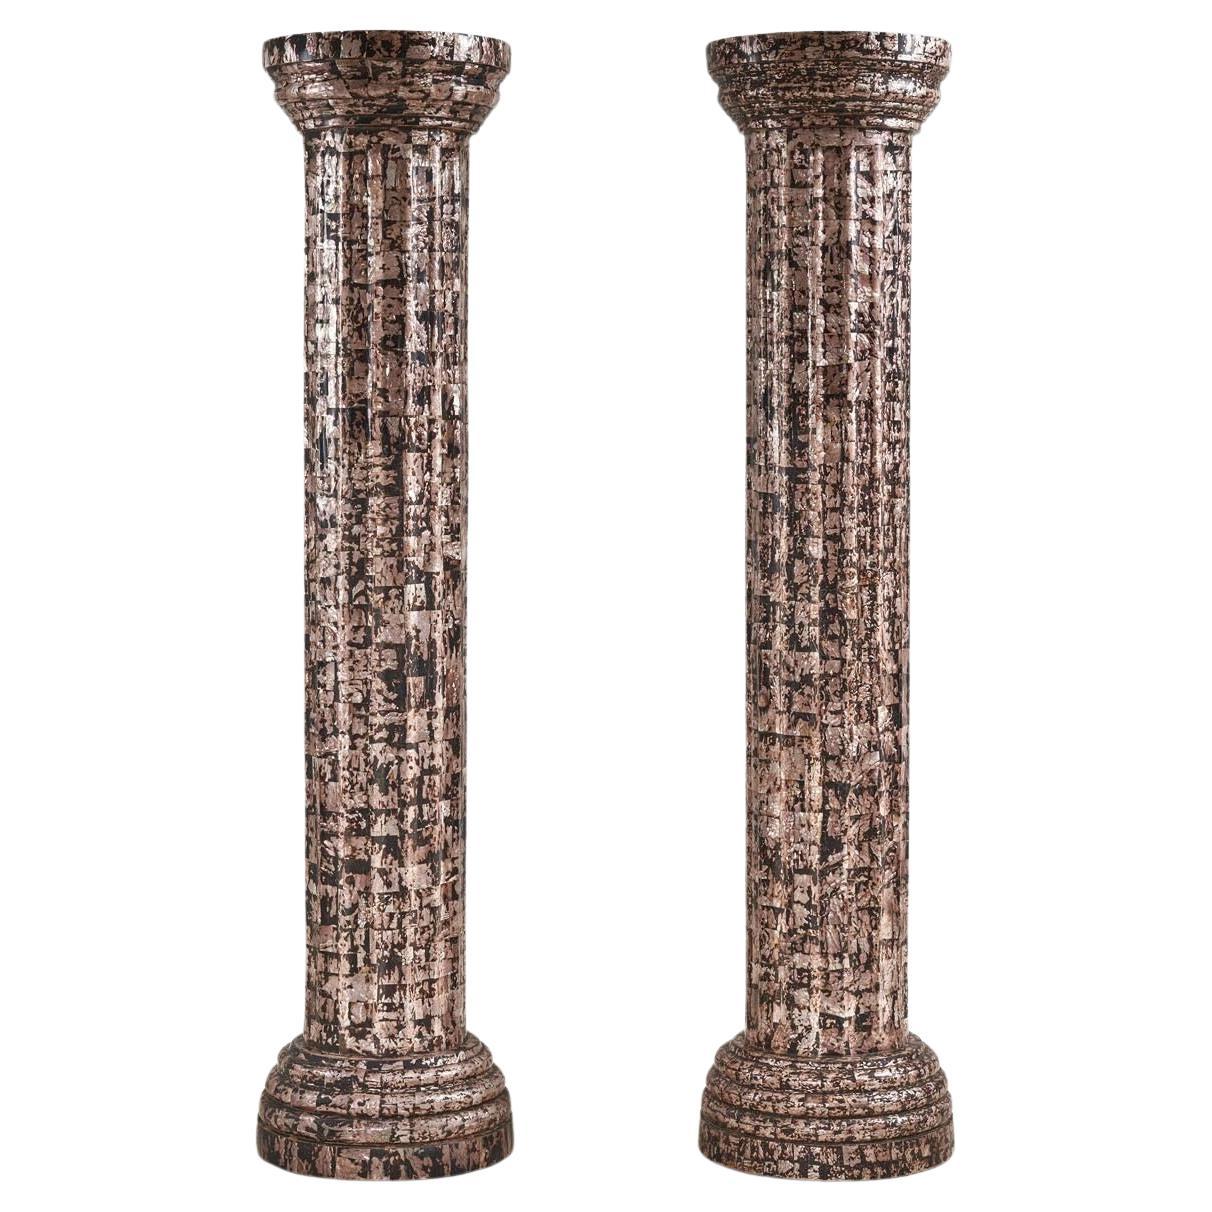 Monumentale kontinentale geriffelte Perlmuttsäulen mit Mosaik, 1970